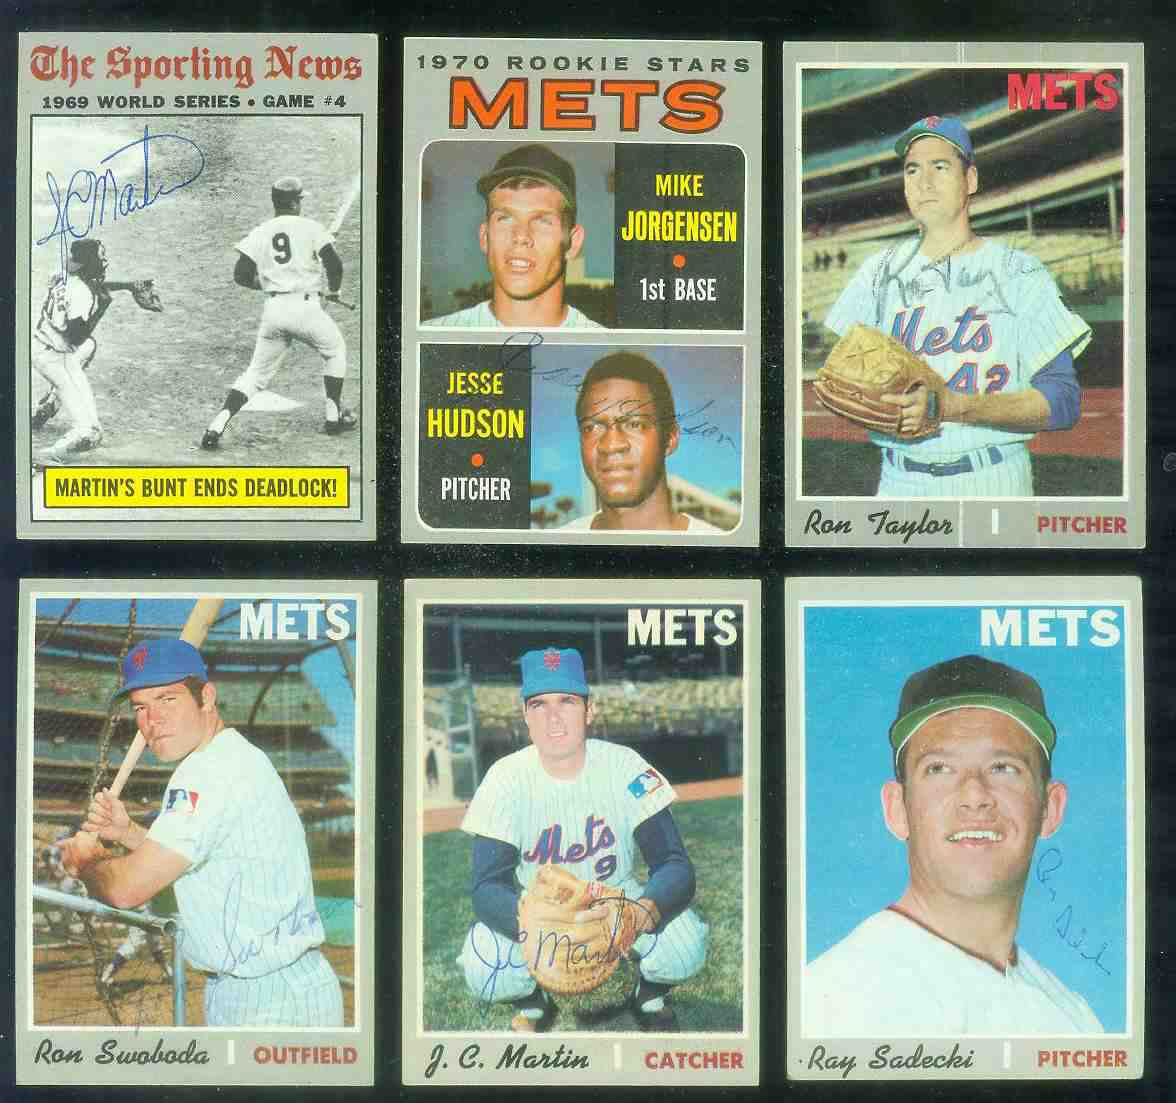 1970 Topps Mike Shannon Baseball Card #614 (HIGH NUMBER!)